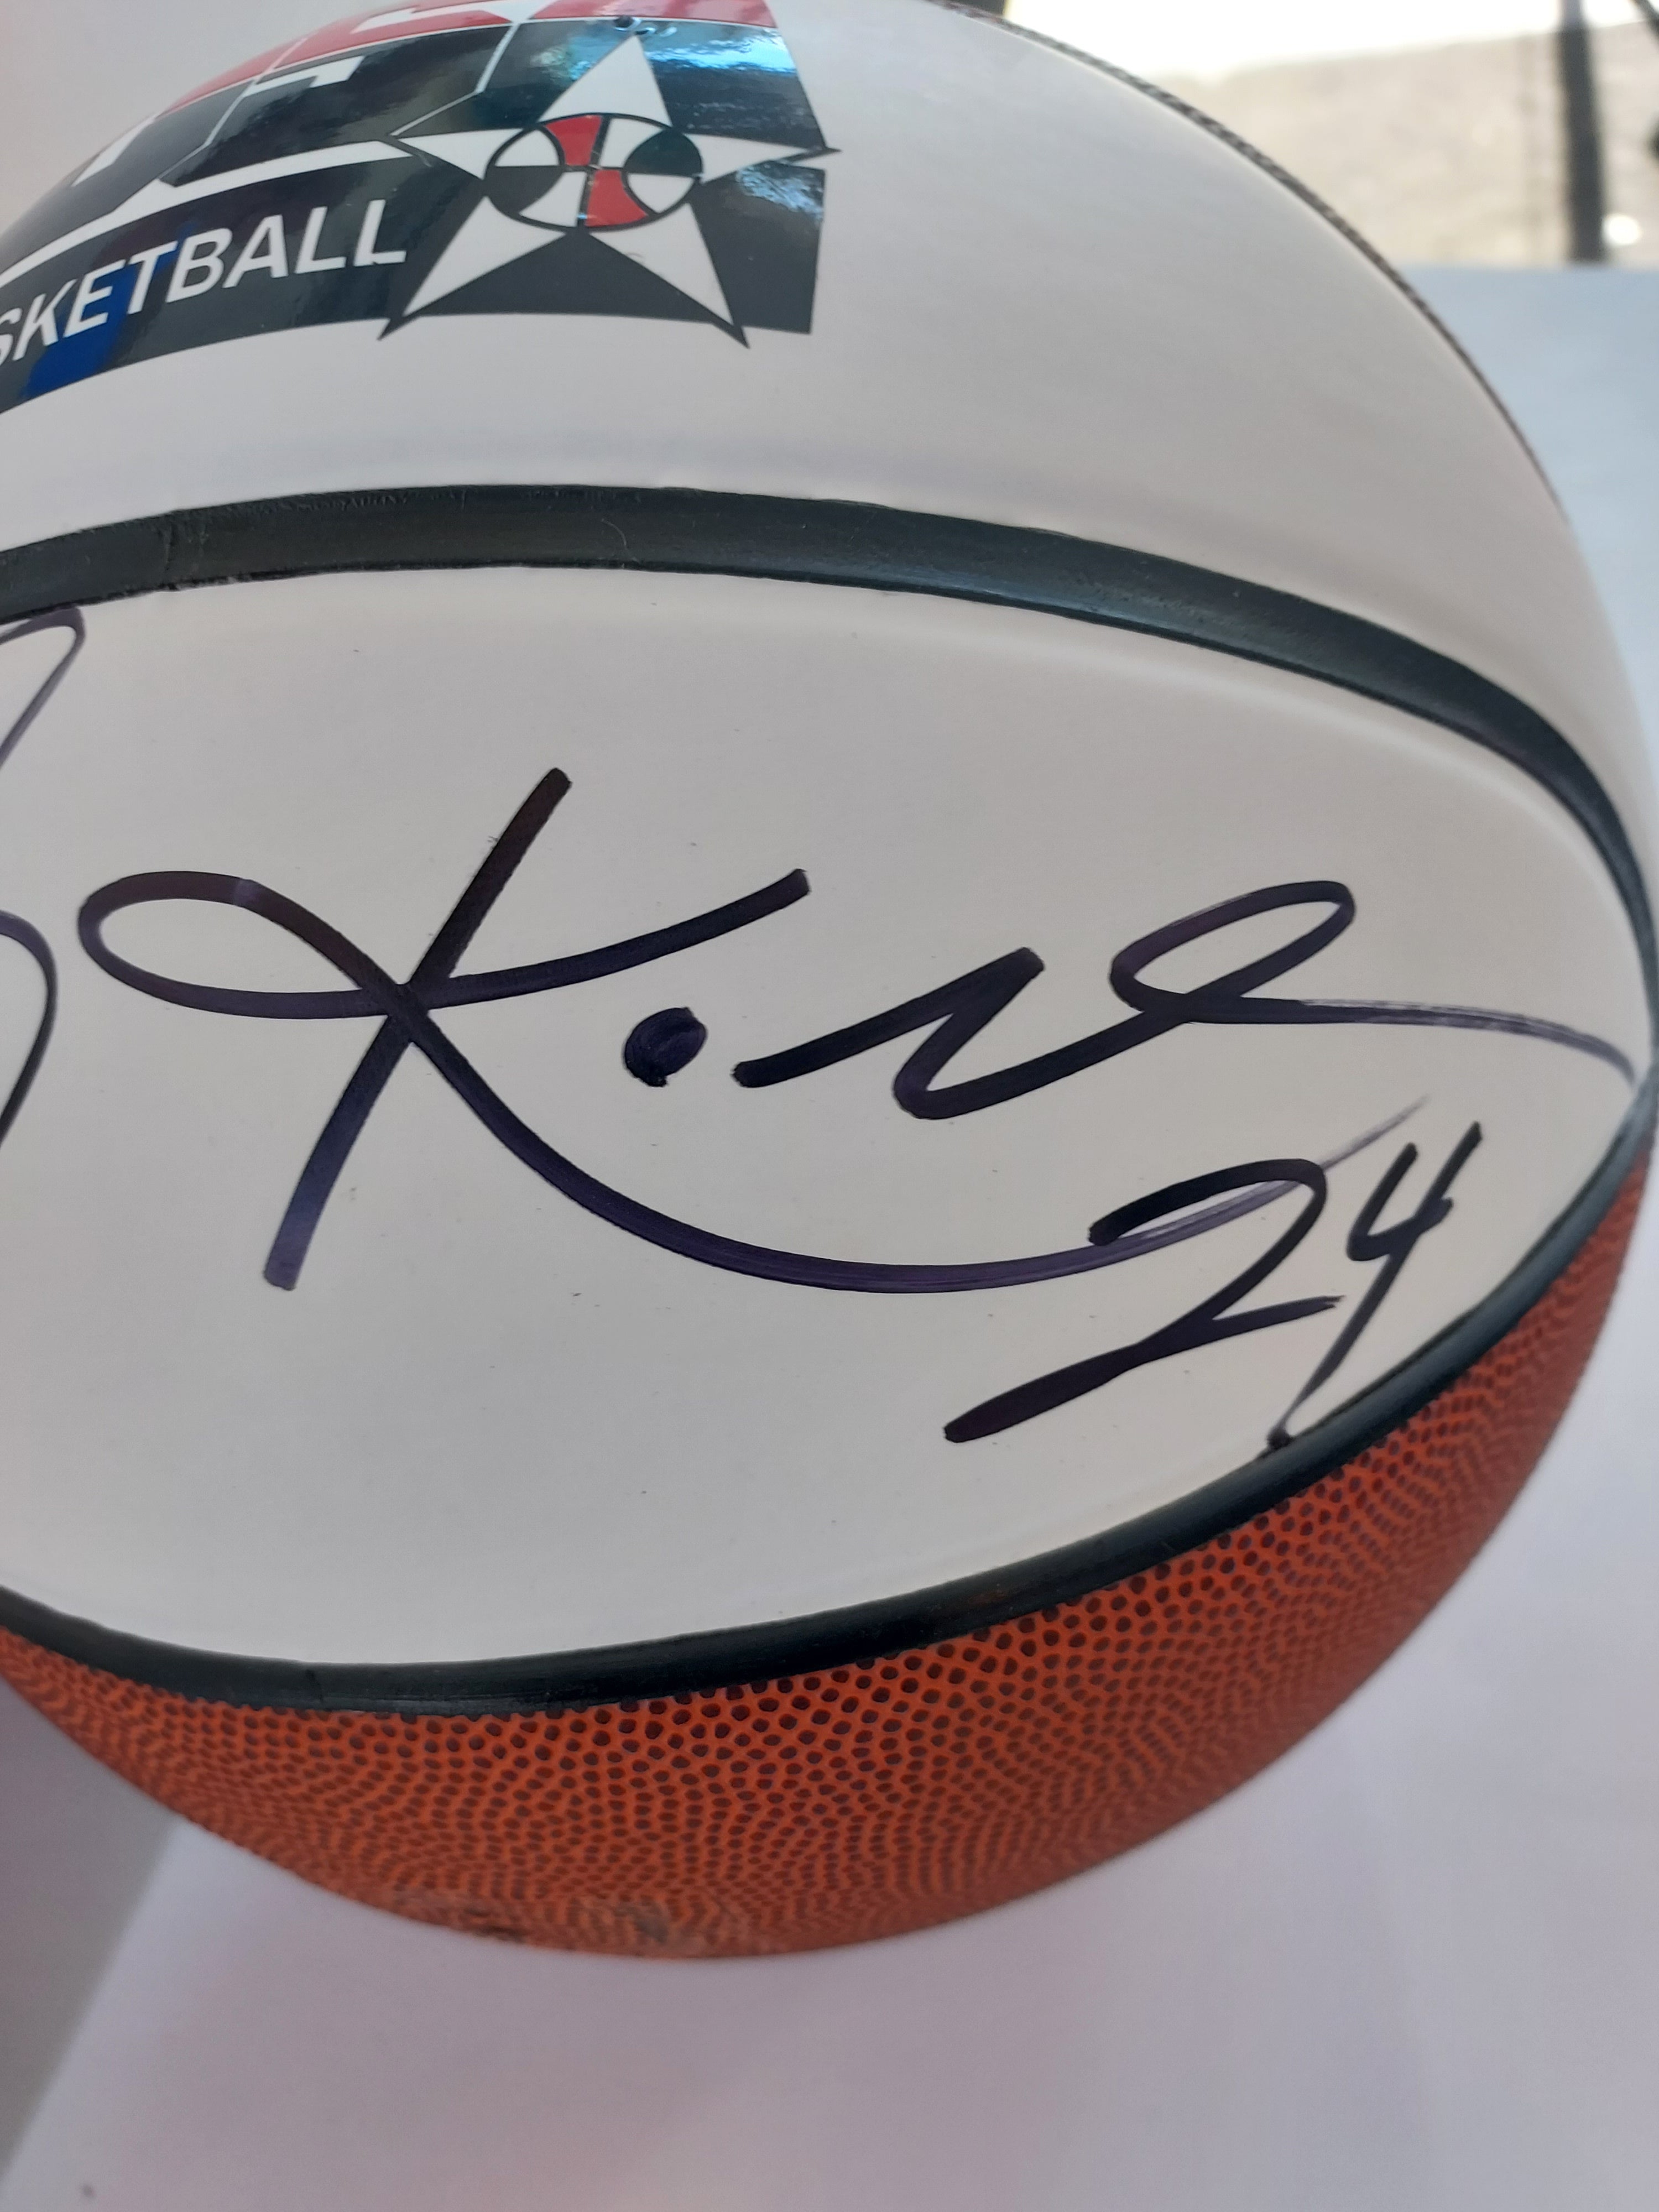 LeBron James & Dwyane Wade Dual Signed Basketball